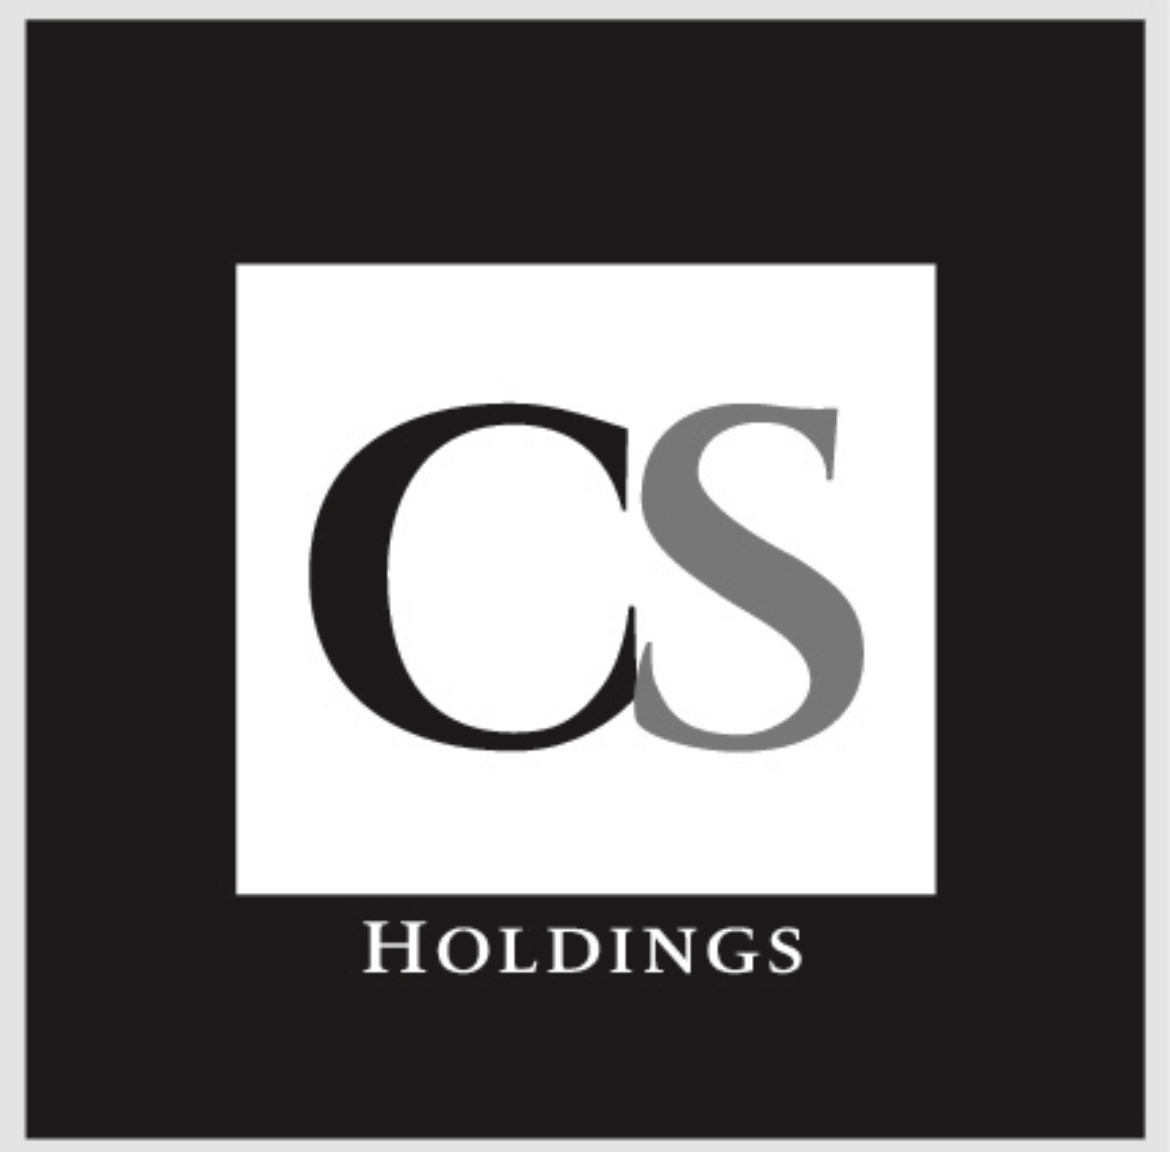 CS Holdings